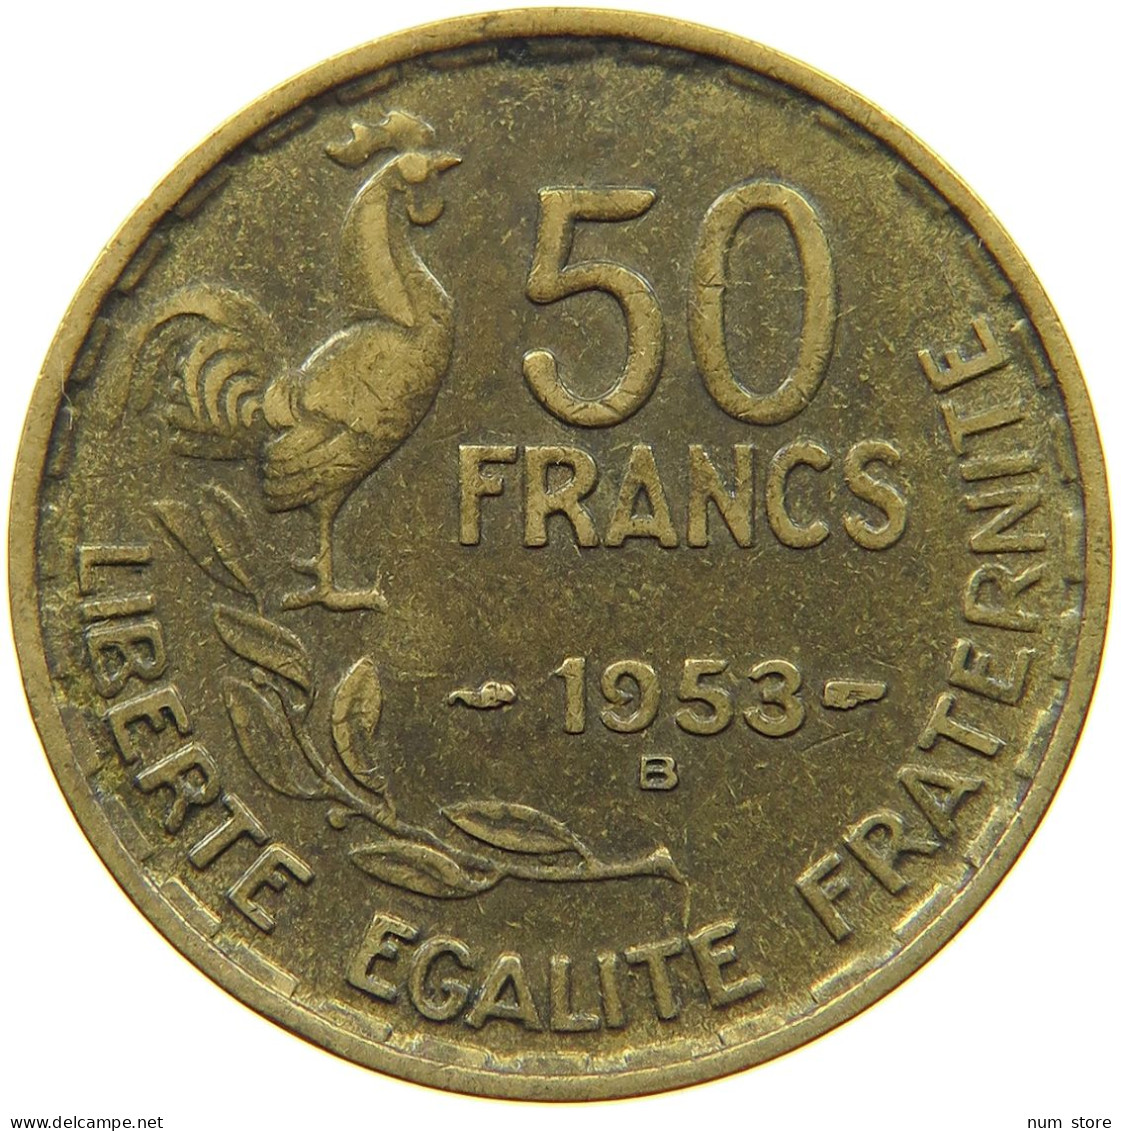 FRANCE 50 FRANCS 1953 B #s066 0237 - 50 Francs